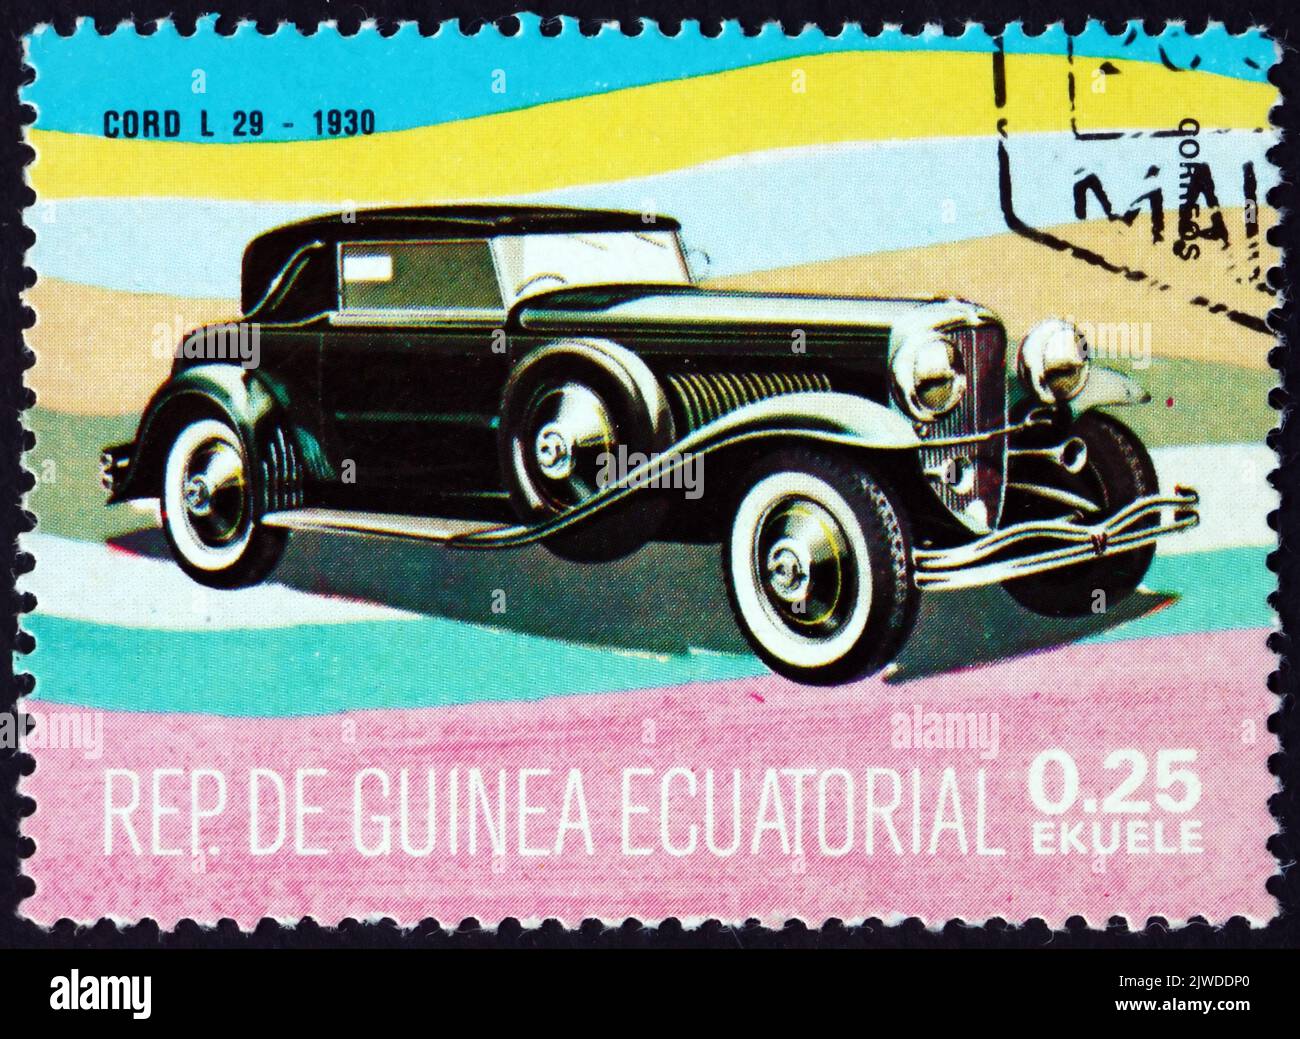 EQUATORIAL GUINEA - CIRCA 1977: a stamp printed in Equatorial Guinea shows Cord L 29, 1930, oldtimer, circa 1977 Stock Photo